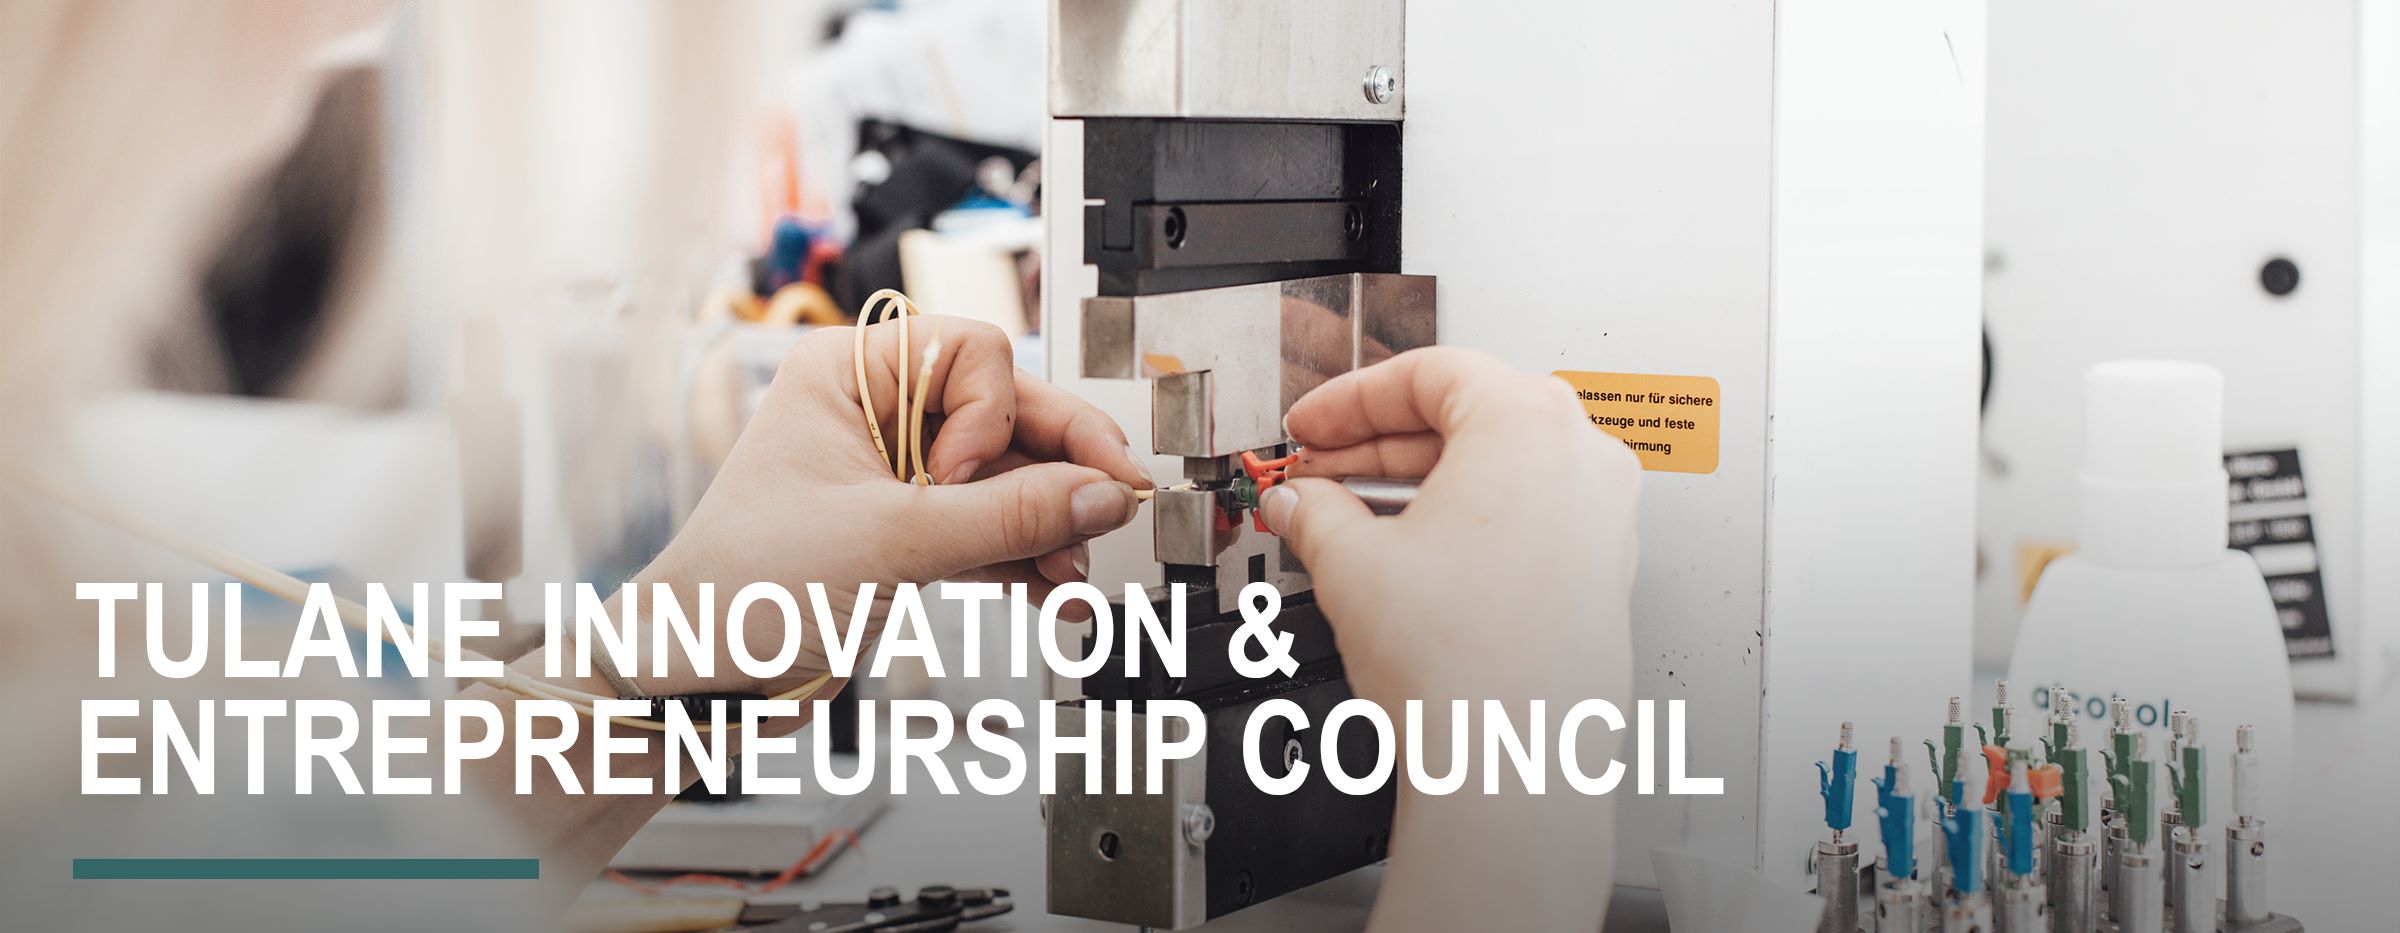 Tulane Innovation and Entrepreneurship Council